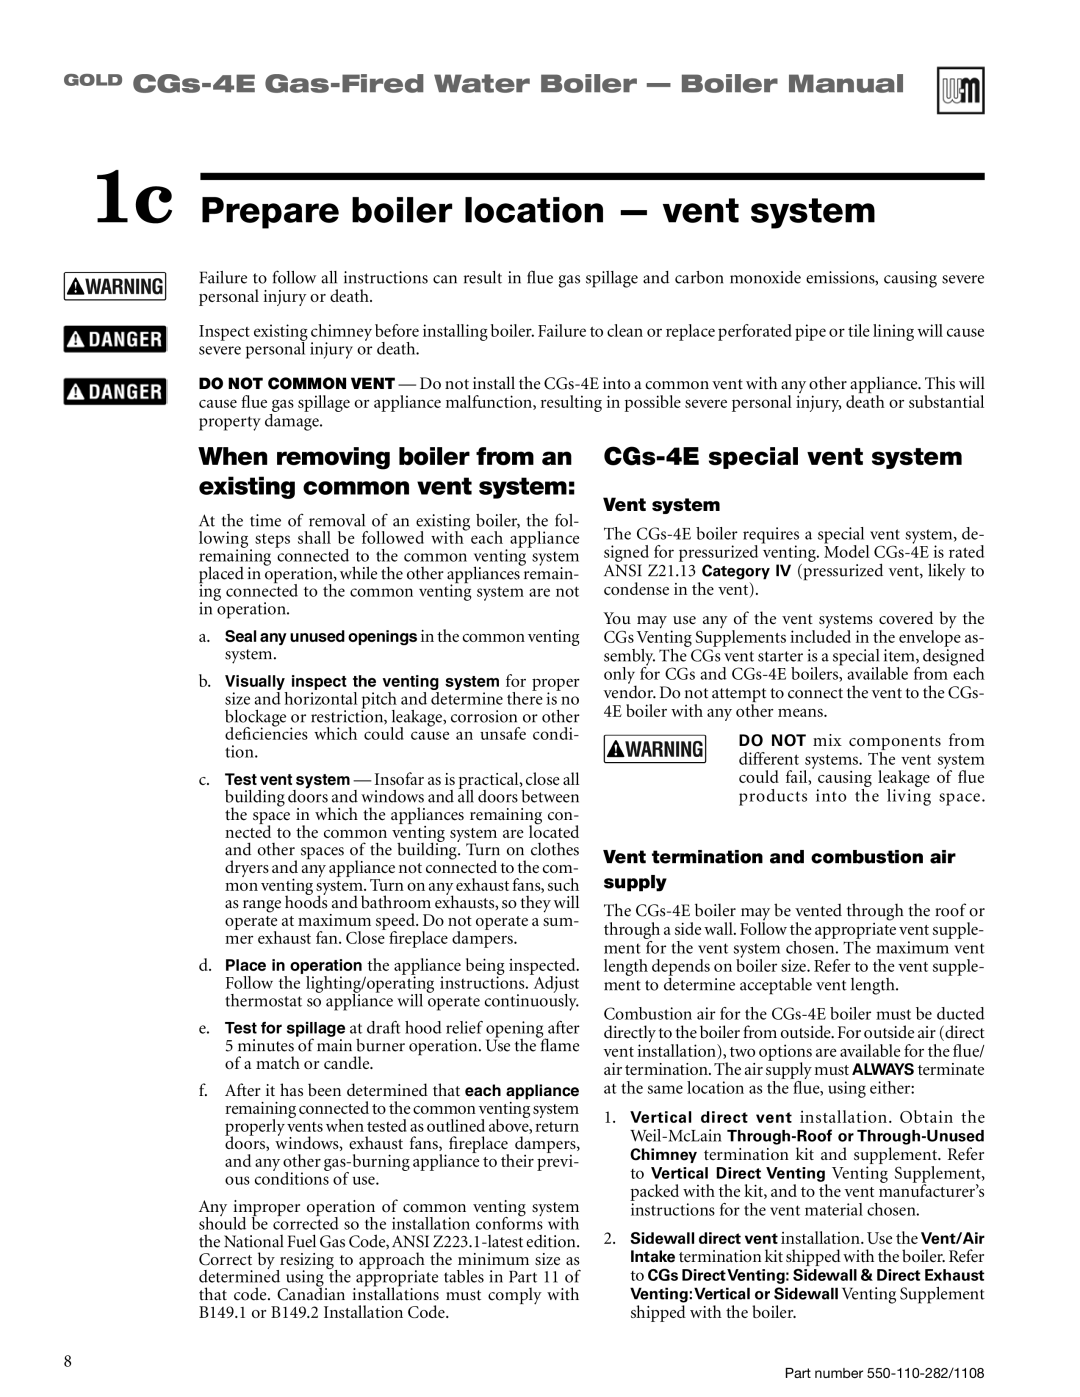 Weil-McLain CGS-4E manual 1c Prepare boiler location - vent system, CGs-4Especial vent system, Vent system 